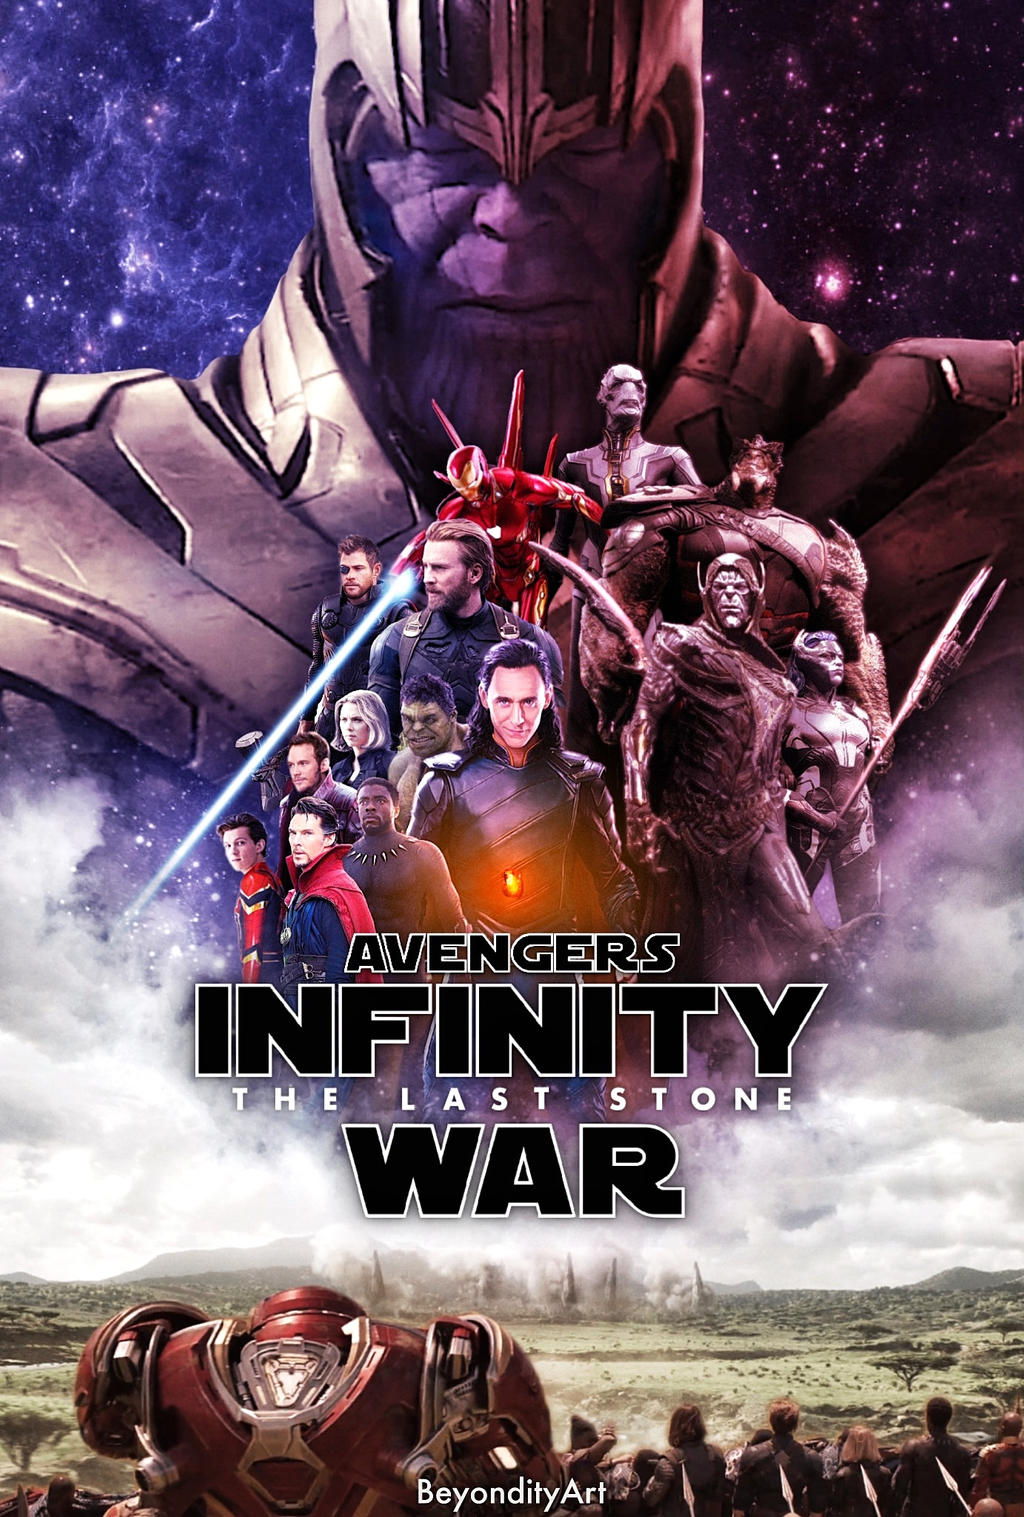 Avengers: Infinity War Poster by BeyondityArt on DeviantArt